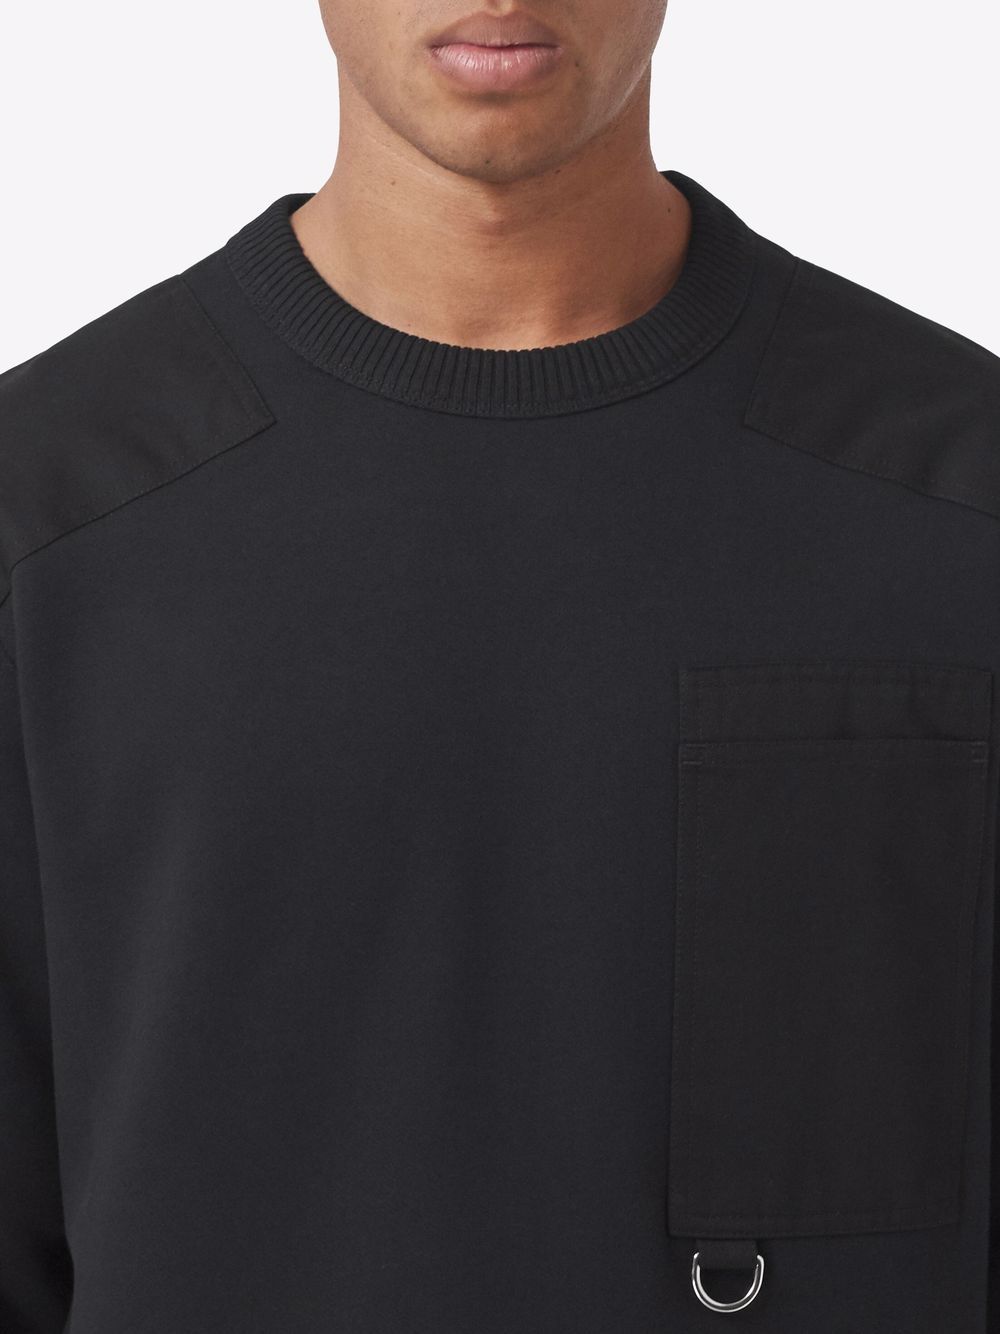 Burberry contrast panel cotton sweatshirt